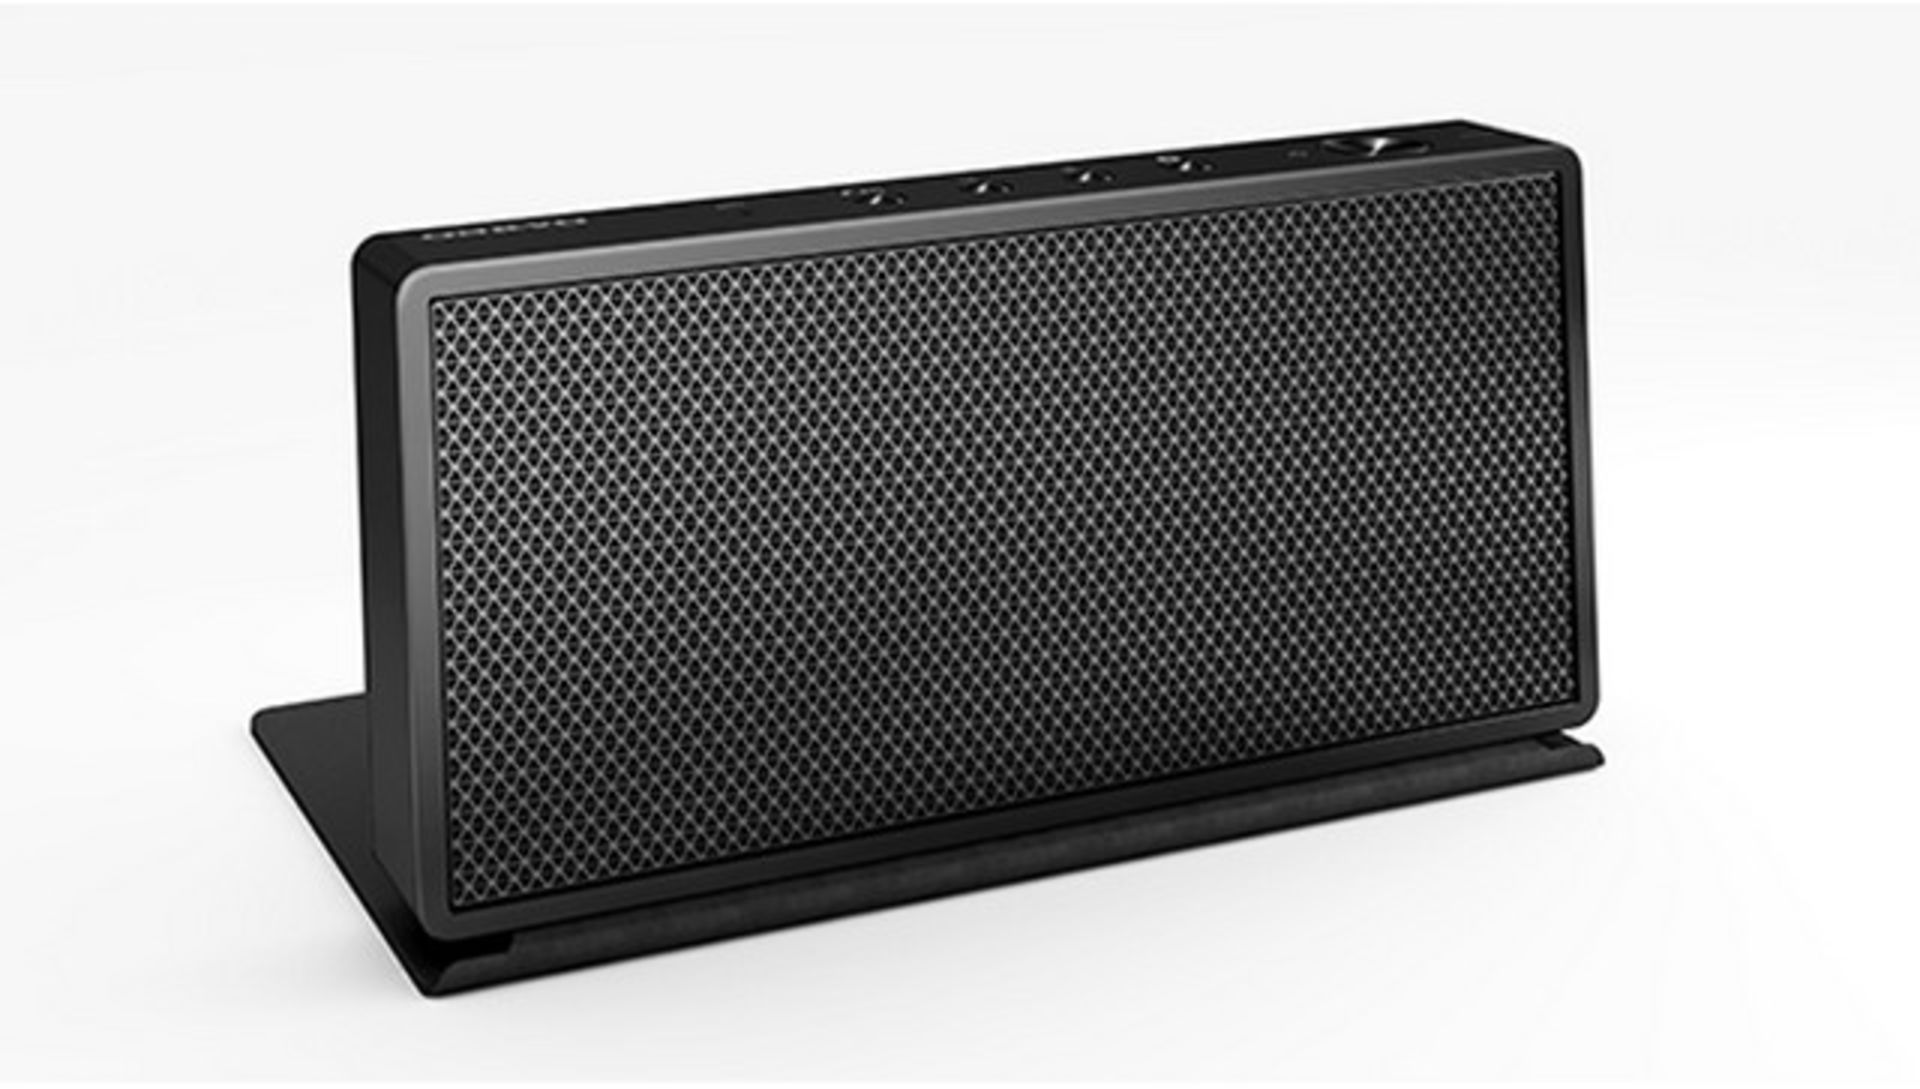 + VAT Brand New Onkyo T3 Lightweight Portable Bluetooth Speaker - Amazon Price £109.00 - 8 Hour